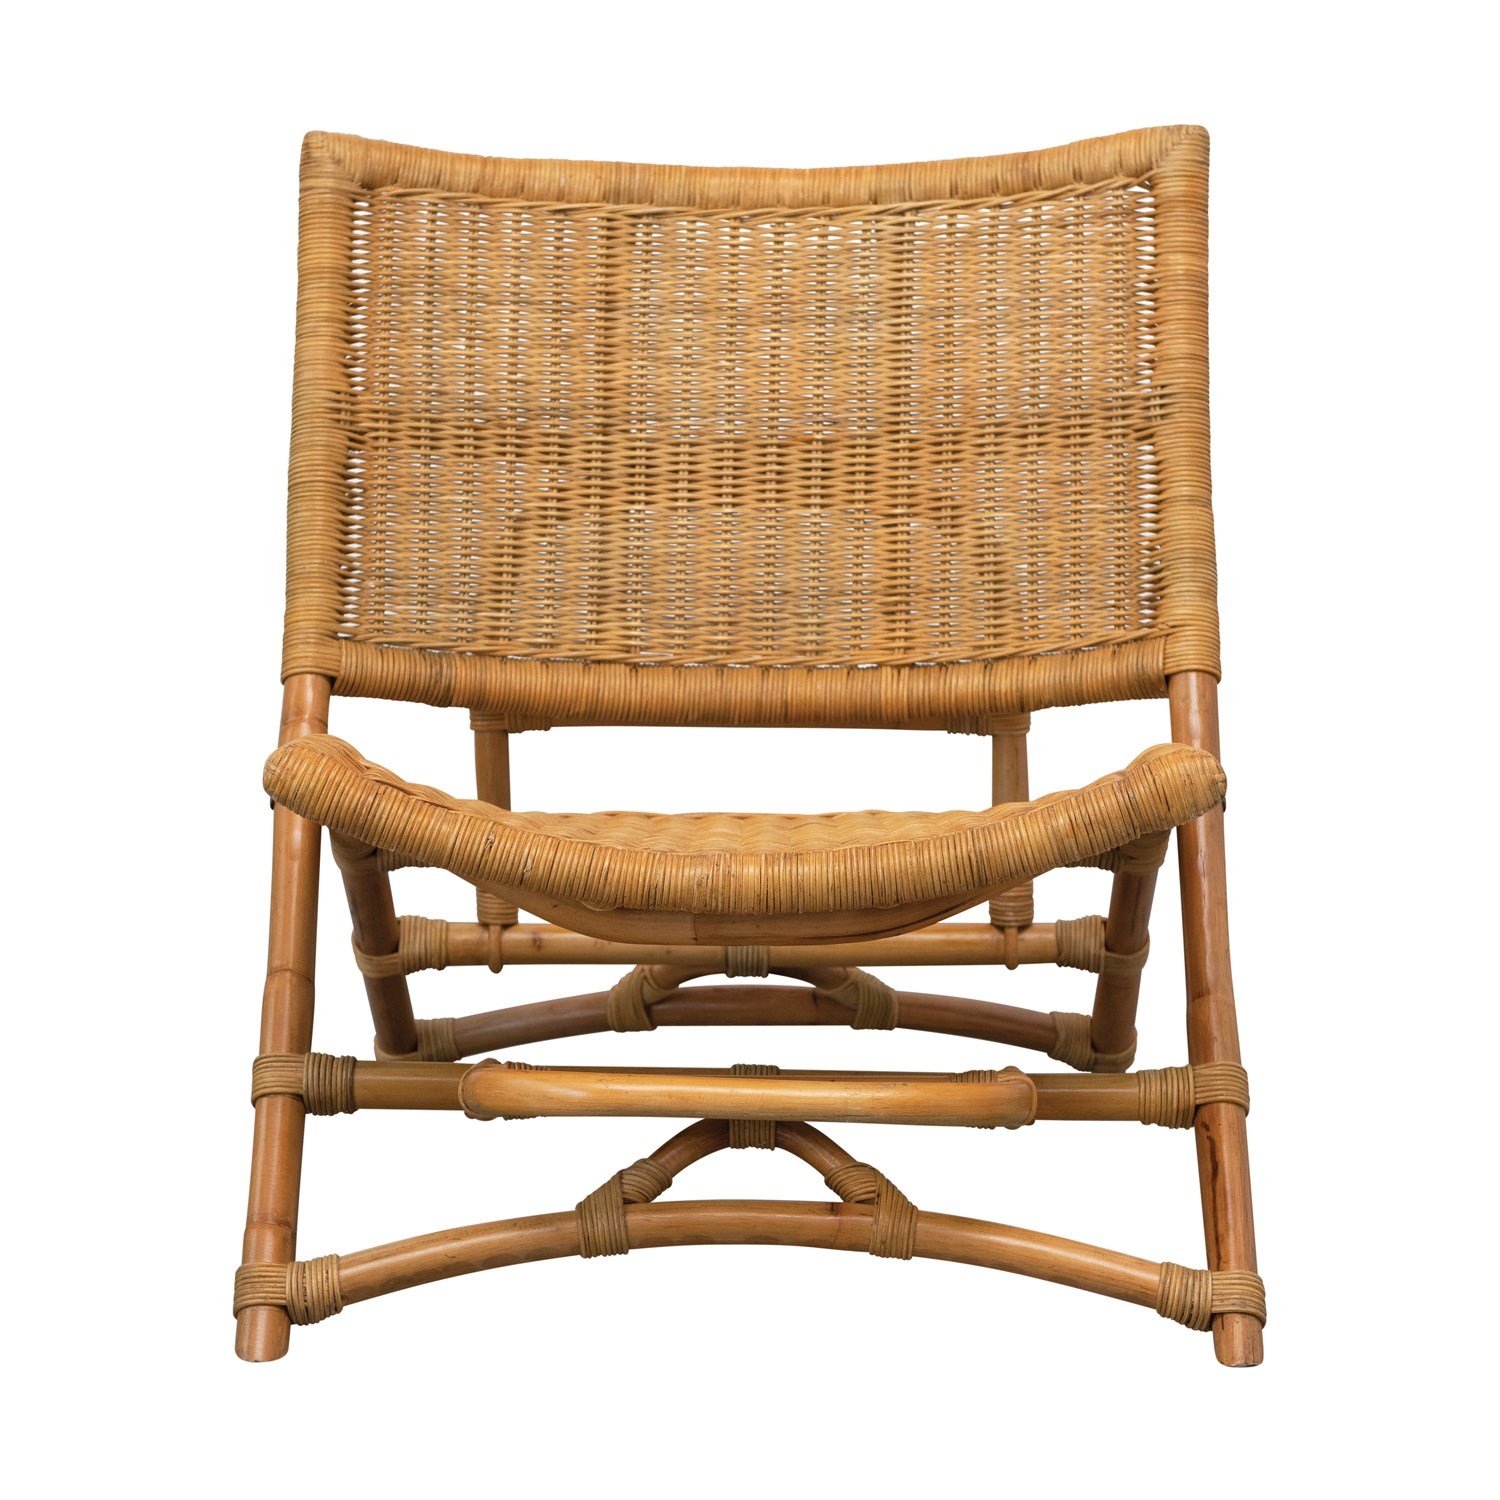 Hand-Woven Rattan Folding Chair - Image 0